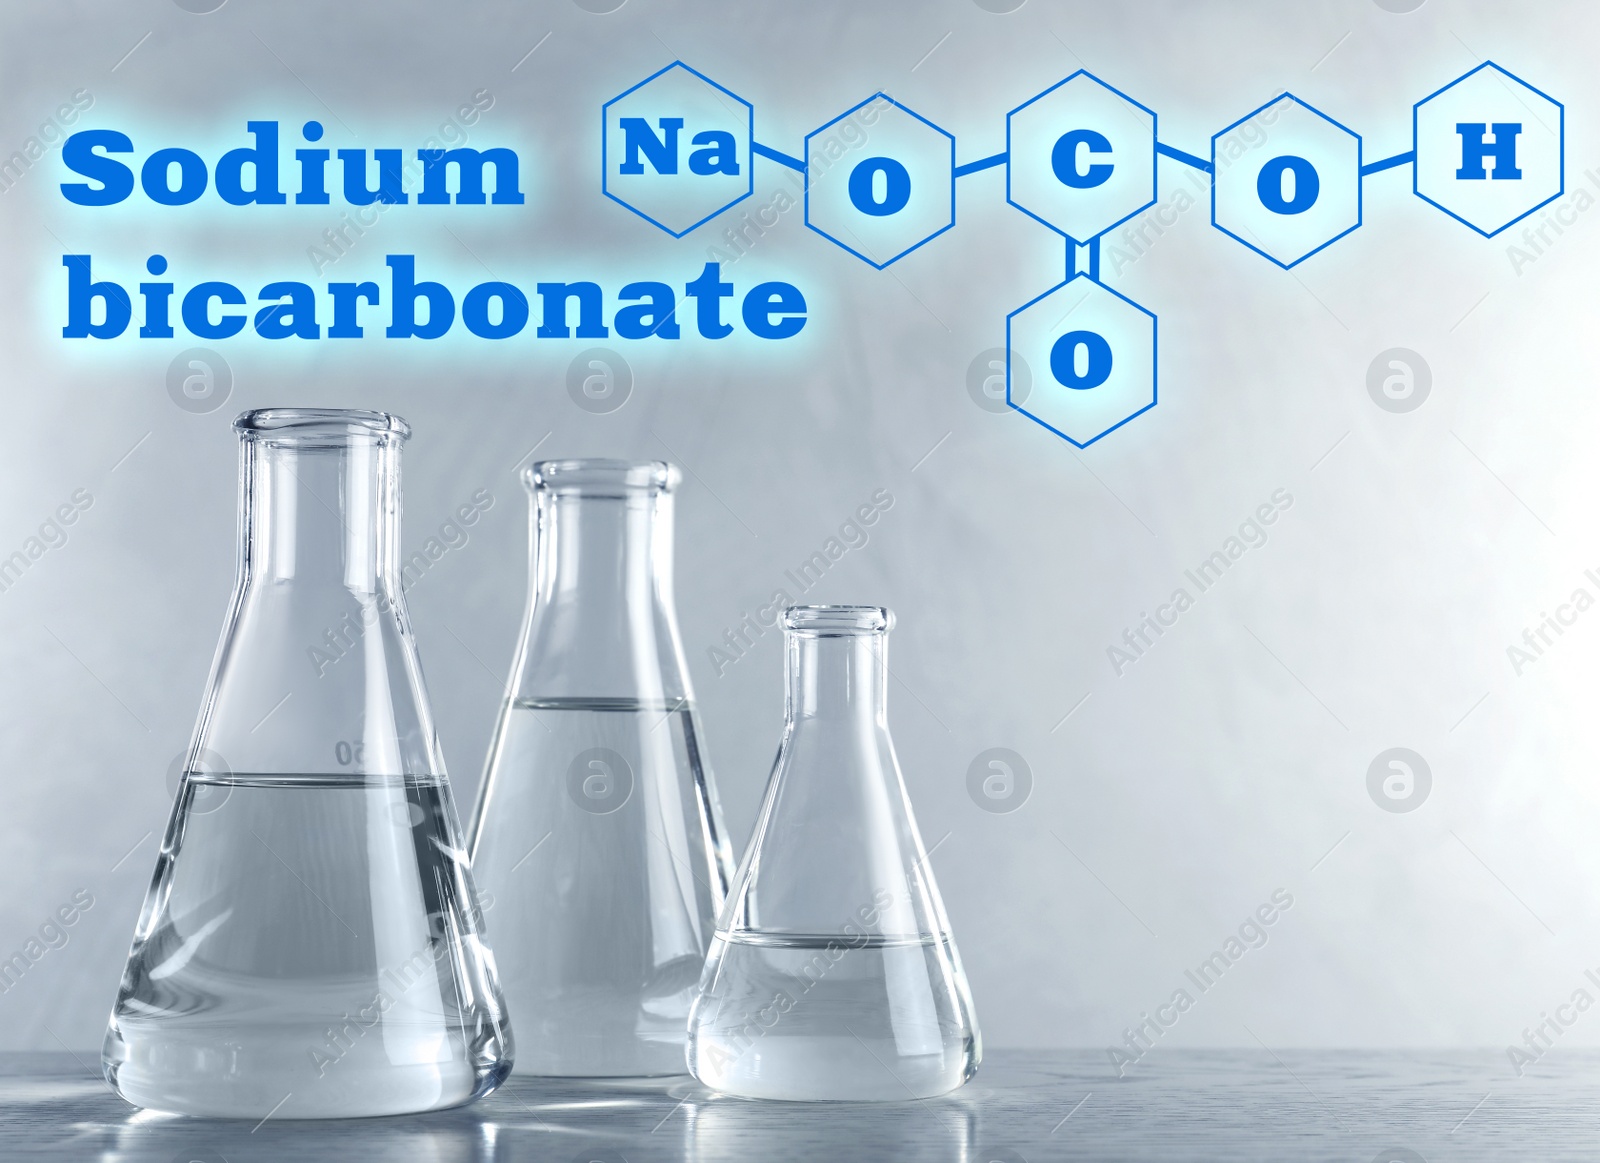 Image of Text Sodium bicarbonate with soda formula and laboratory glassware on background